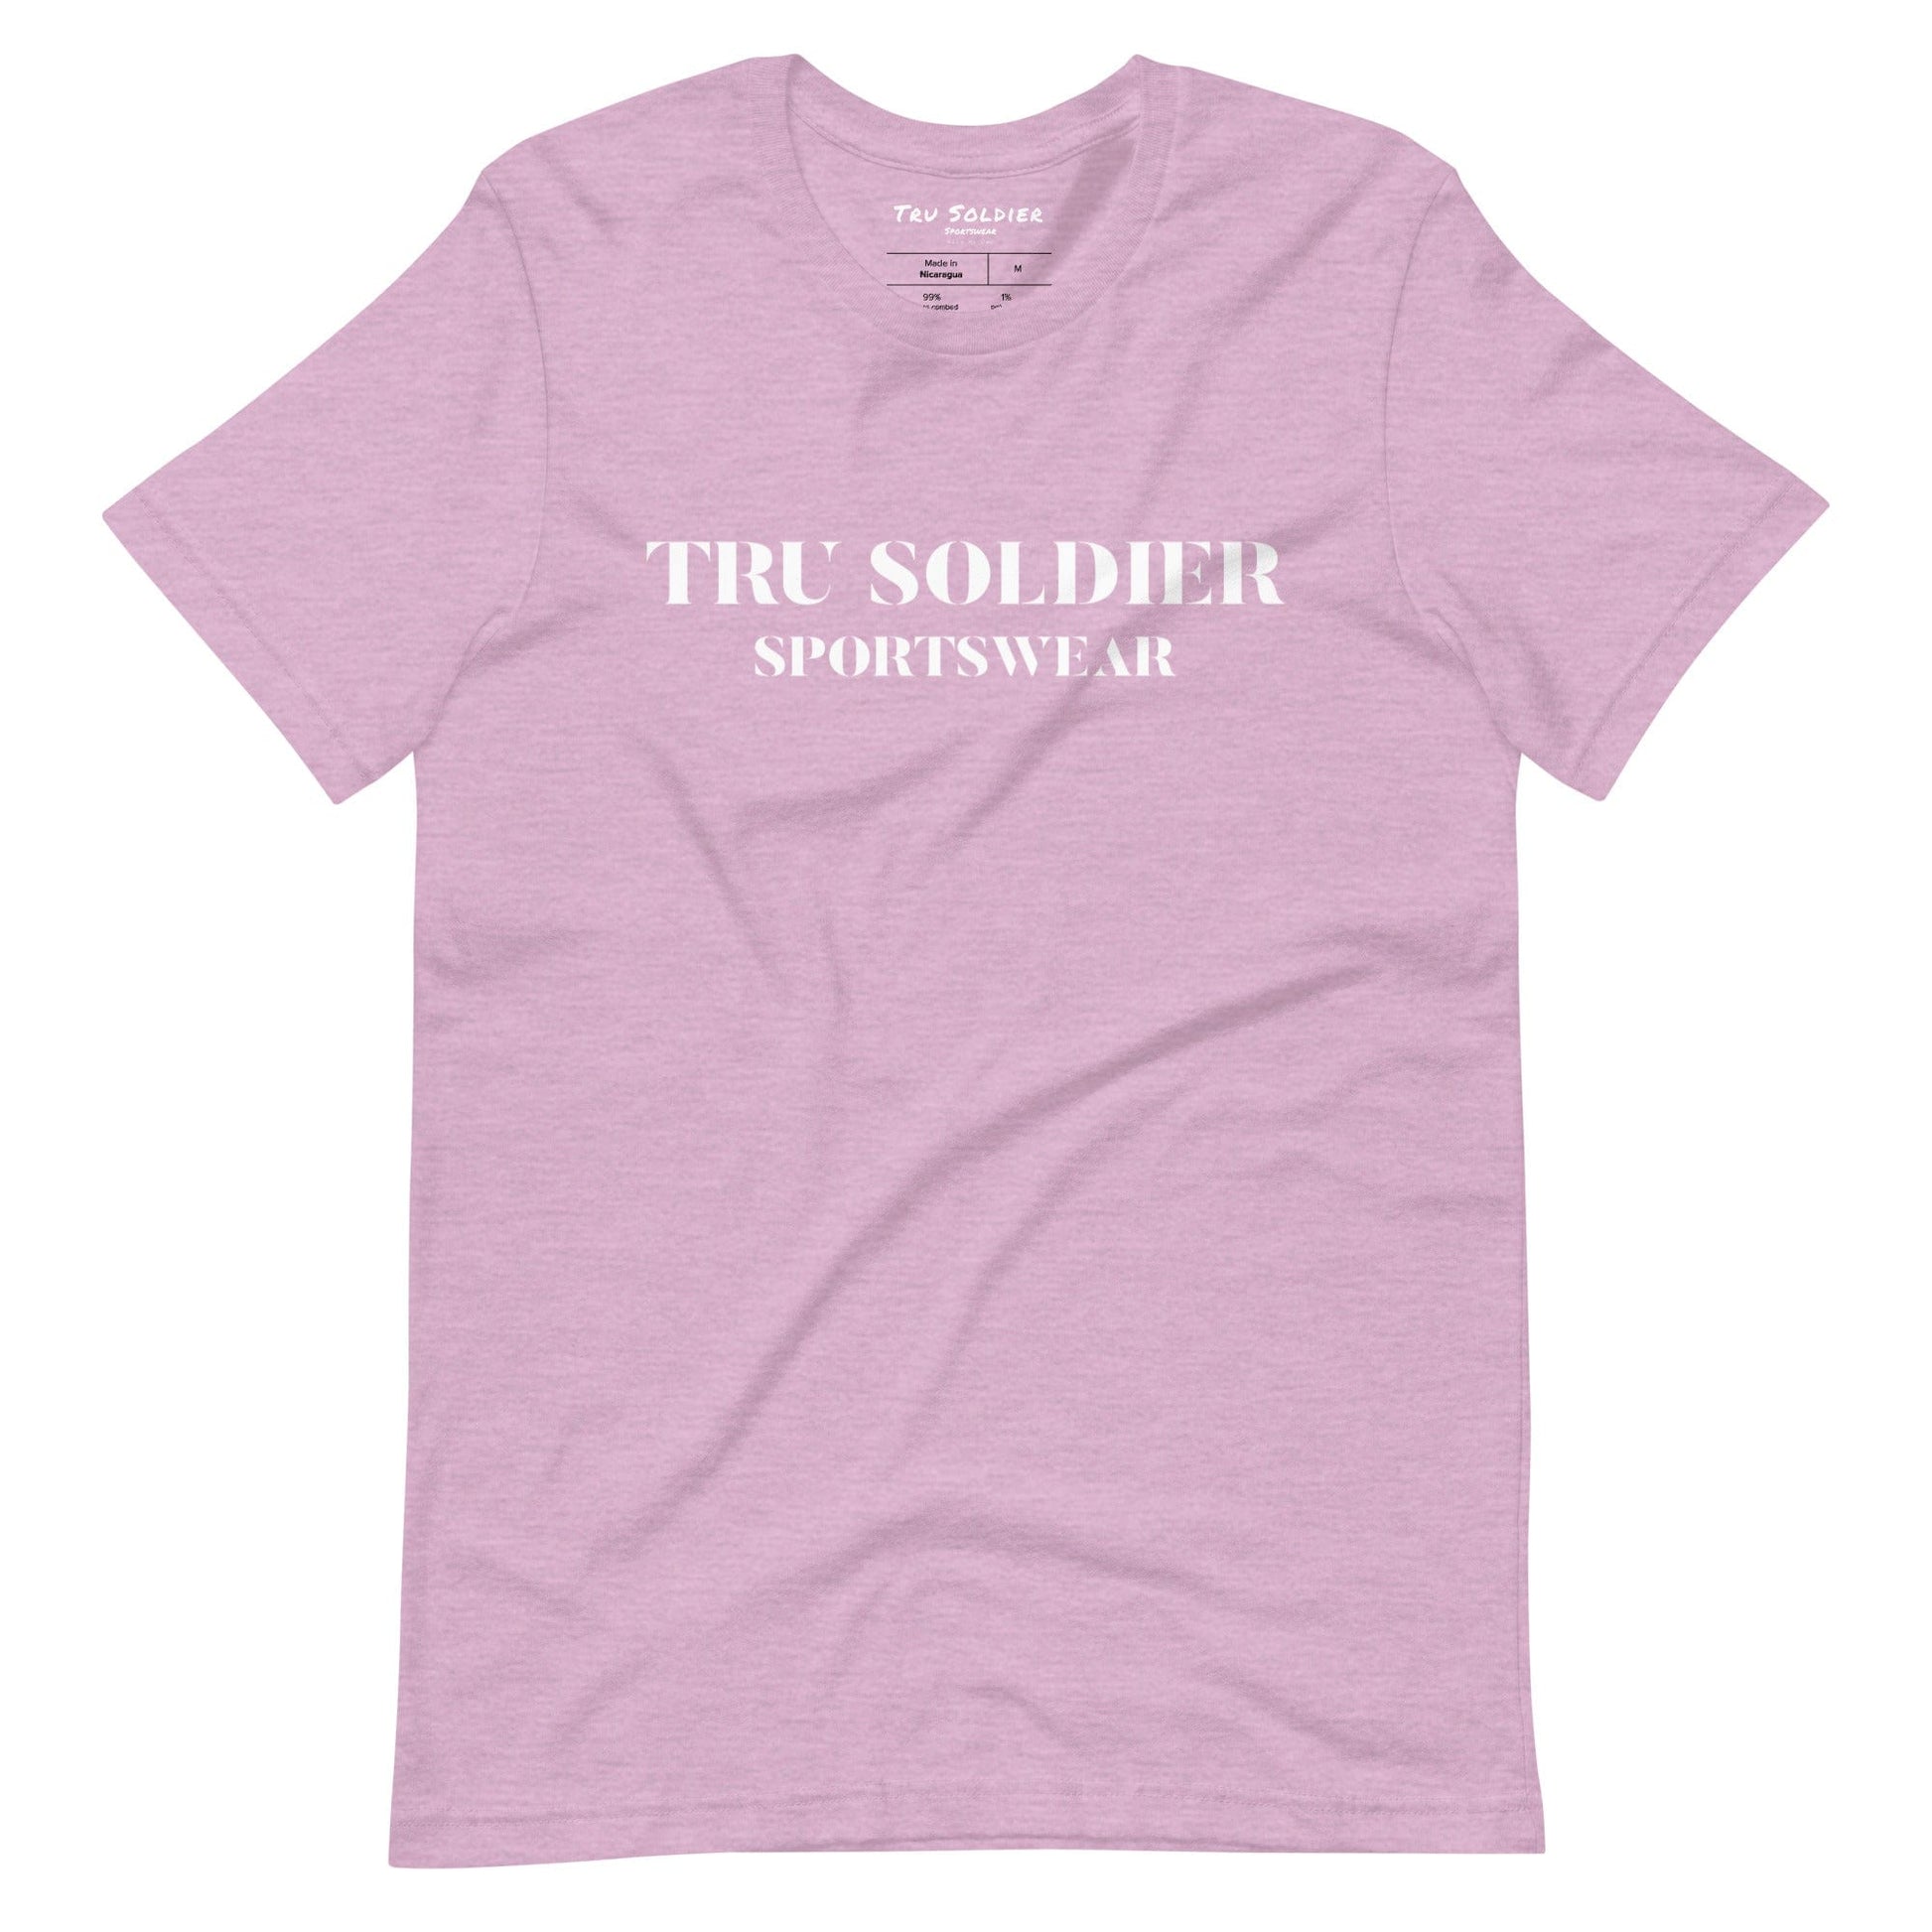 Tru Soldier Sportswear  Heather Prism Lilac / XS Tru Soldier Sportswear t-shirt